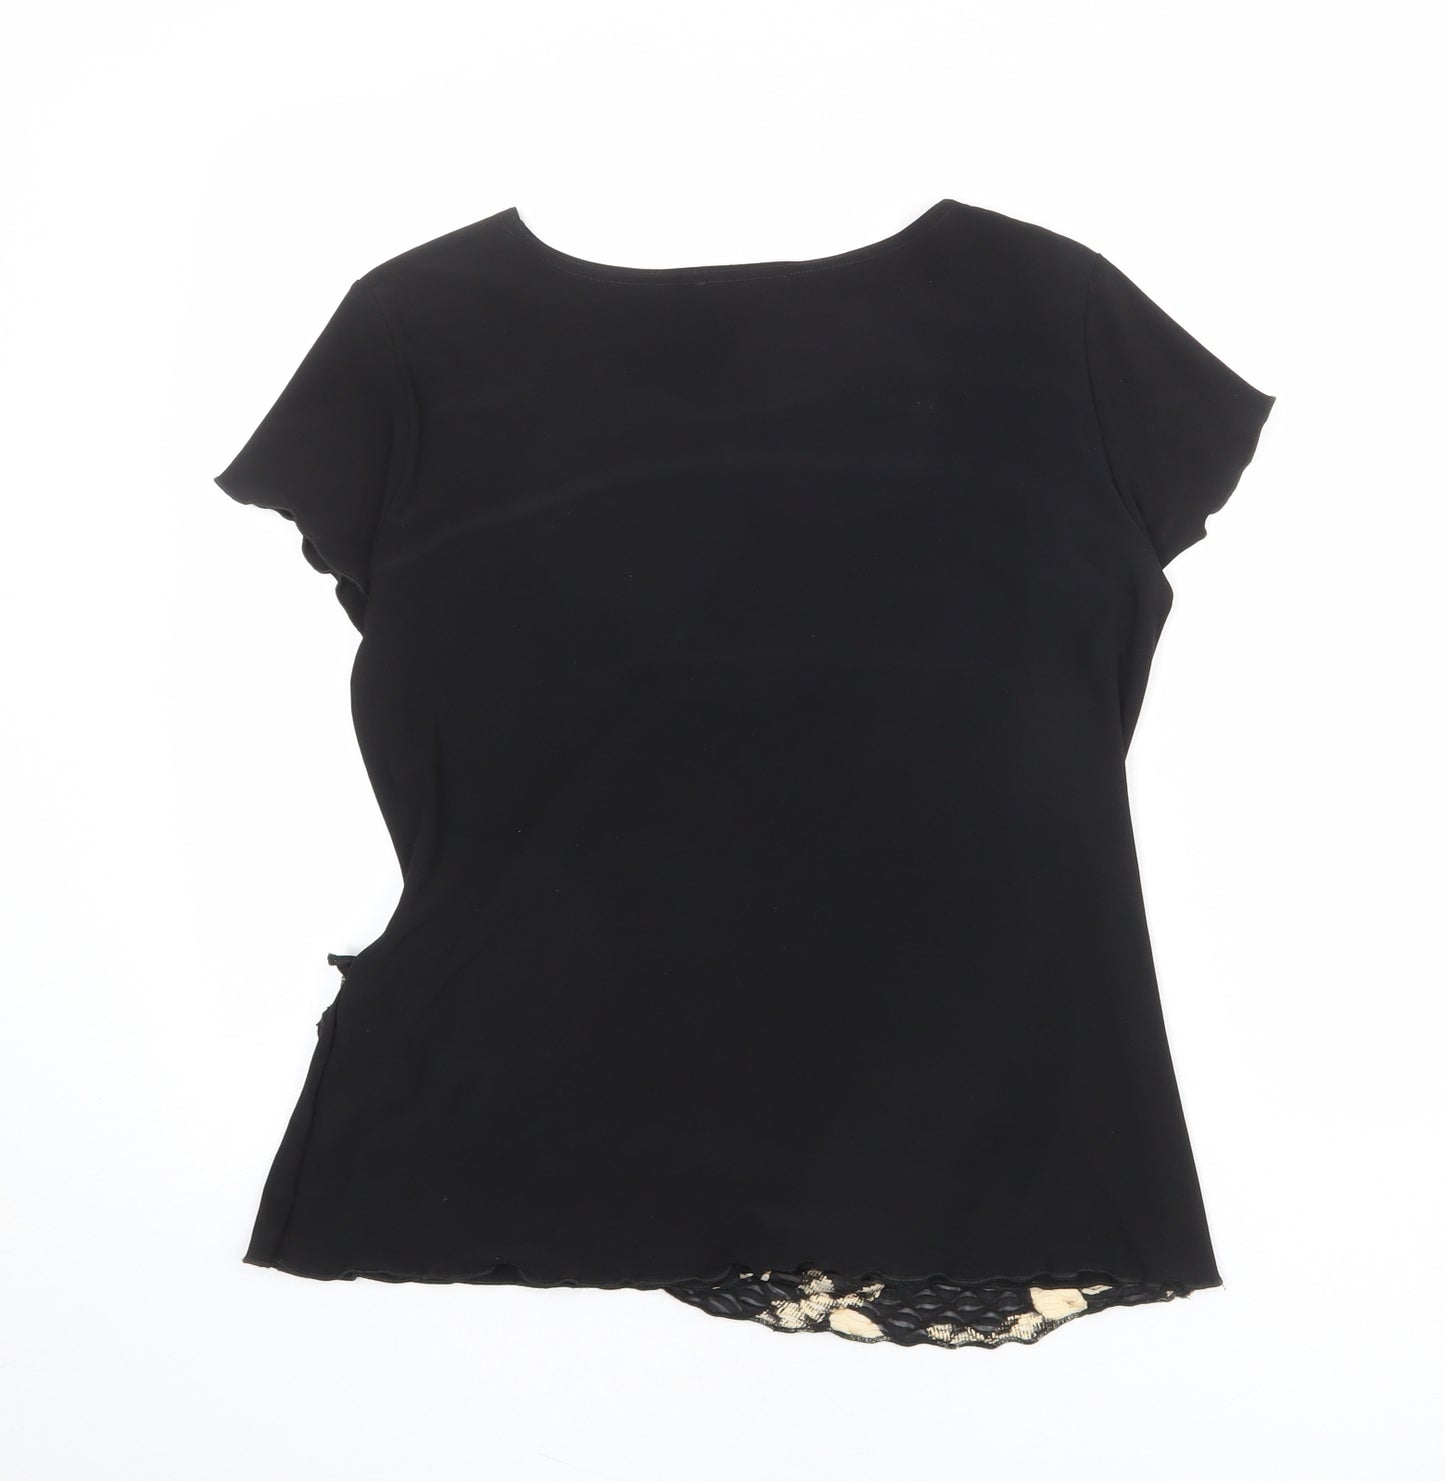 Saloos Womens Black Geometric Polyester Basic T-Shirt Size M Round Neck